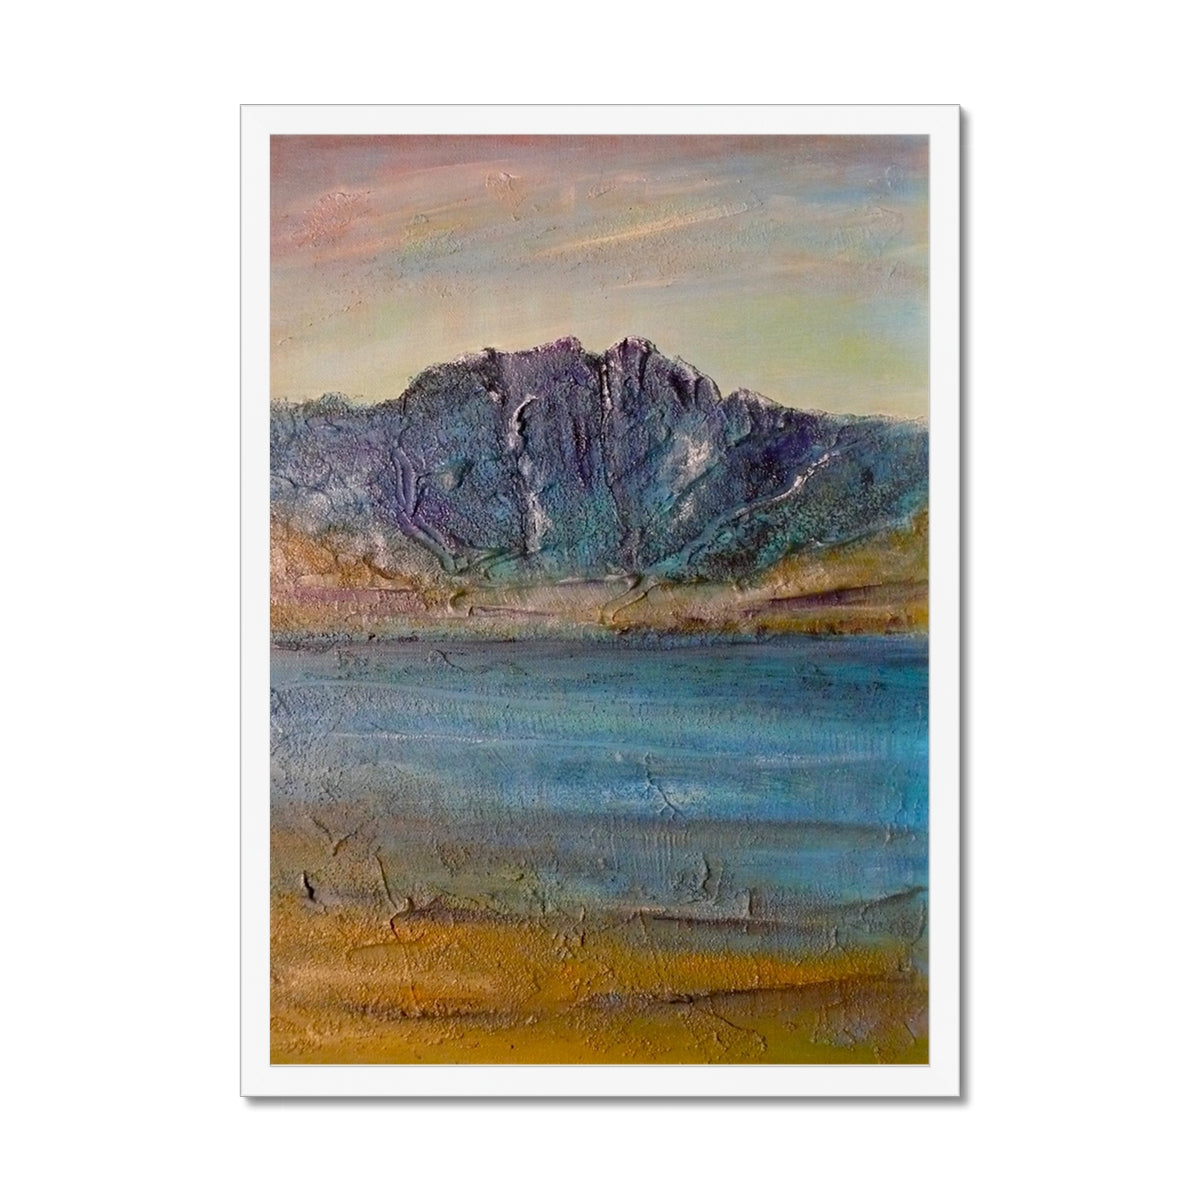 Torridon Painting | Framed Prints From Scotland-Framed Prints-Scottish Lochs & Mountains Art Gallery-A2 Portrait-White Frame-Paintings, Prints, Homeware, Art Gifts From Scotland By Scottish Artist Kevin Hunter